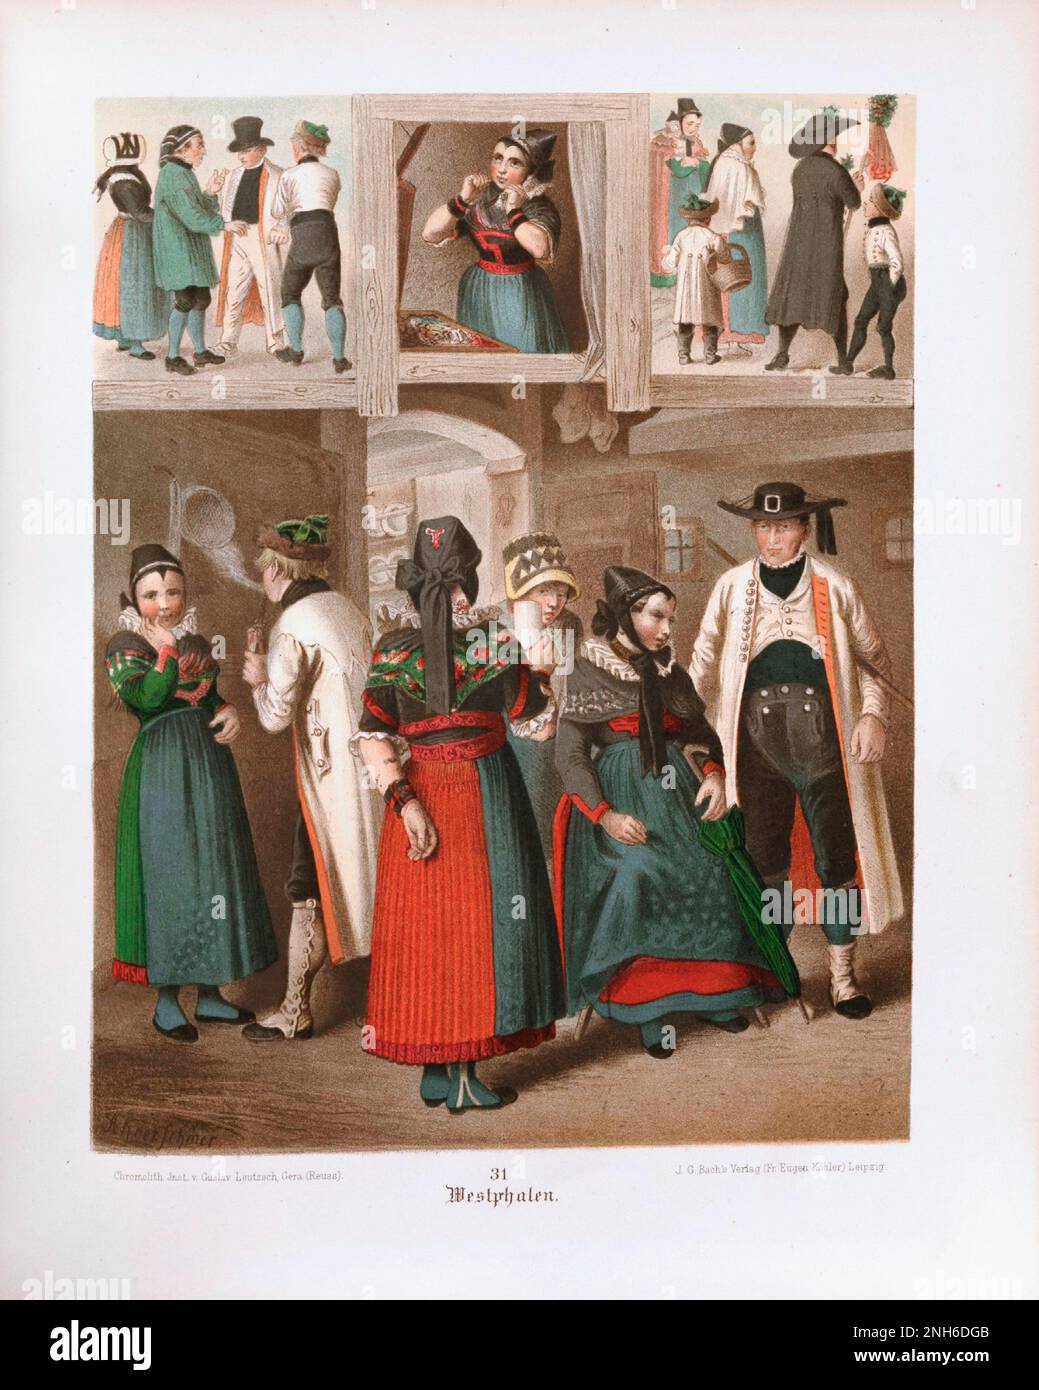 German folk costume. Westphalia (German: Westphalen). 19th-century lithography. Stock Photo